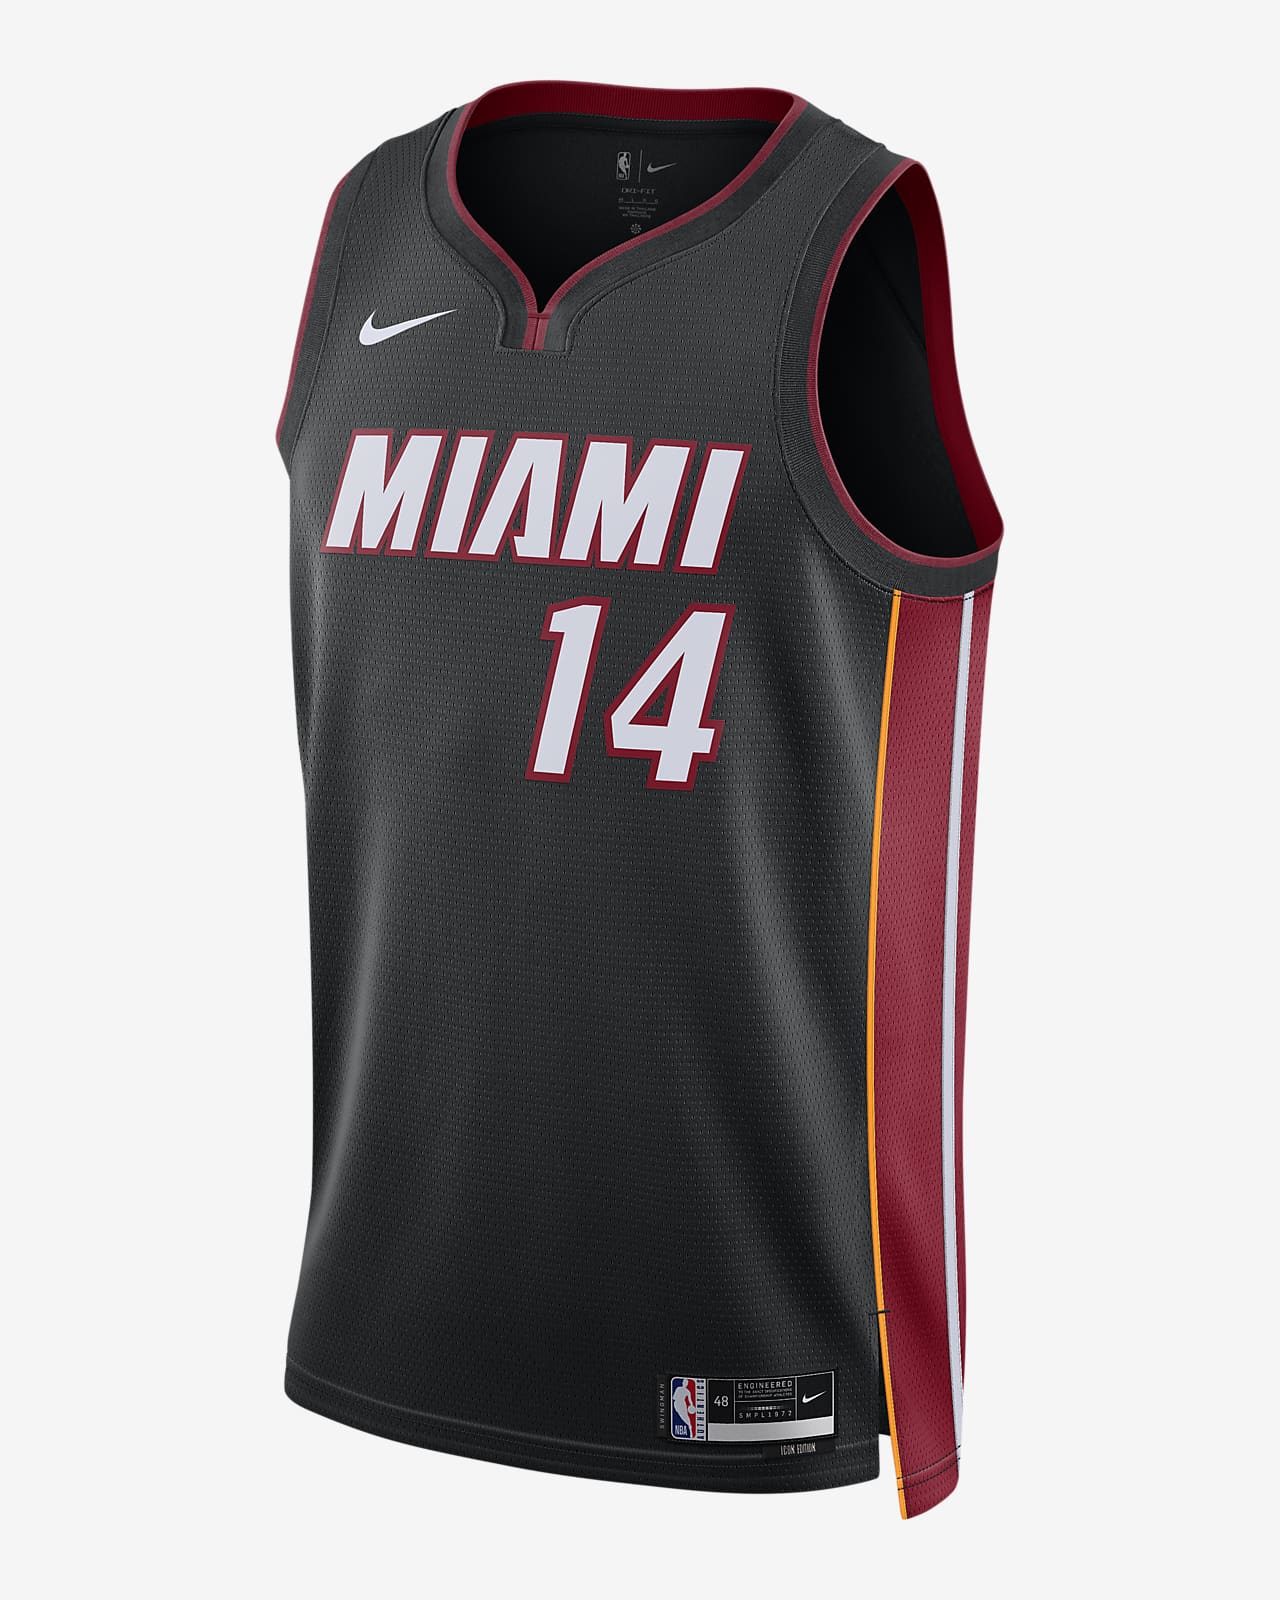 2022/23 赛季迈阿密热火队 Icon Edition Nike Dri-FIT NBA Swingman Jersey 男子速干球衣